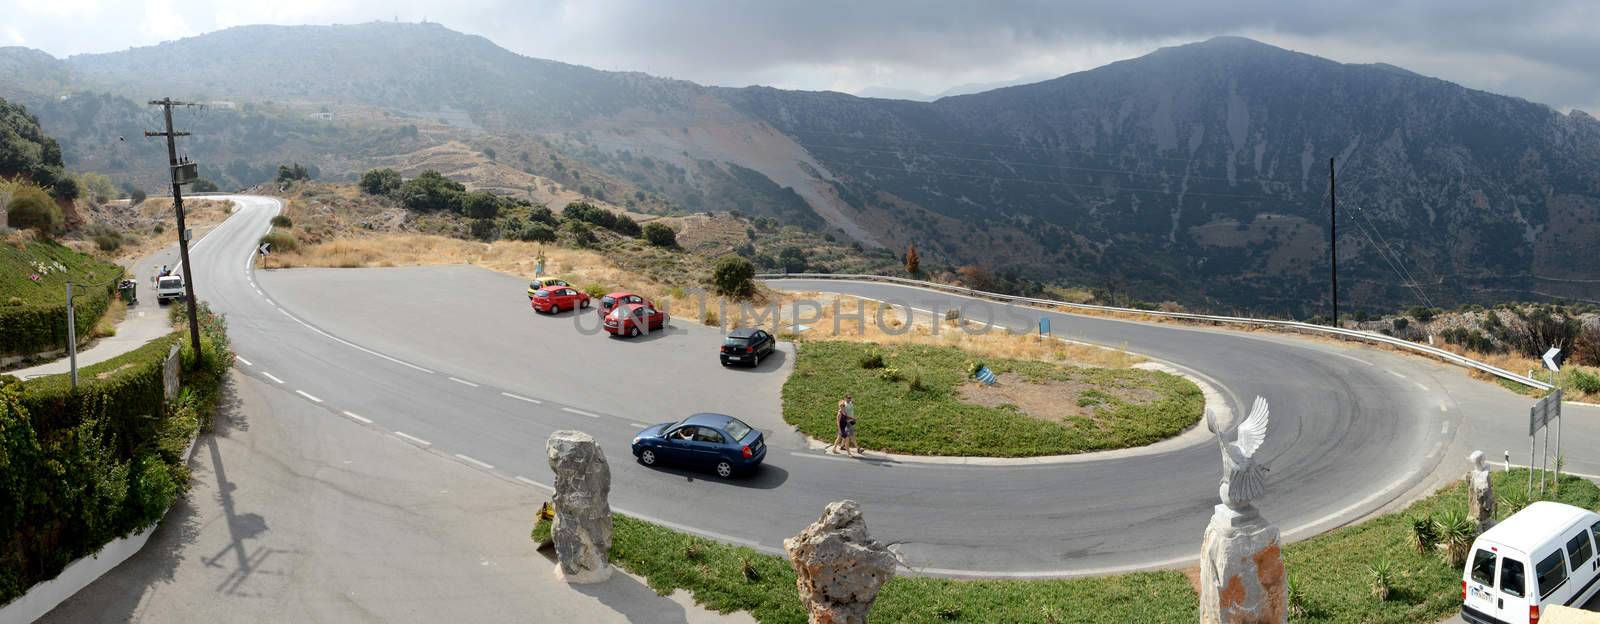 Road of Crete by Alenmax